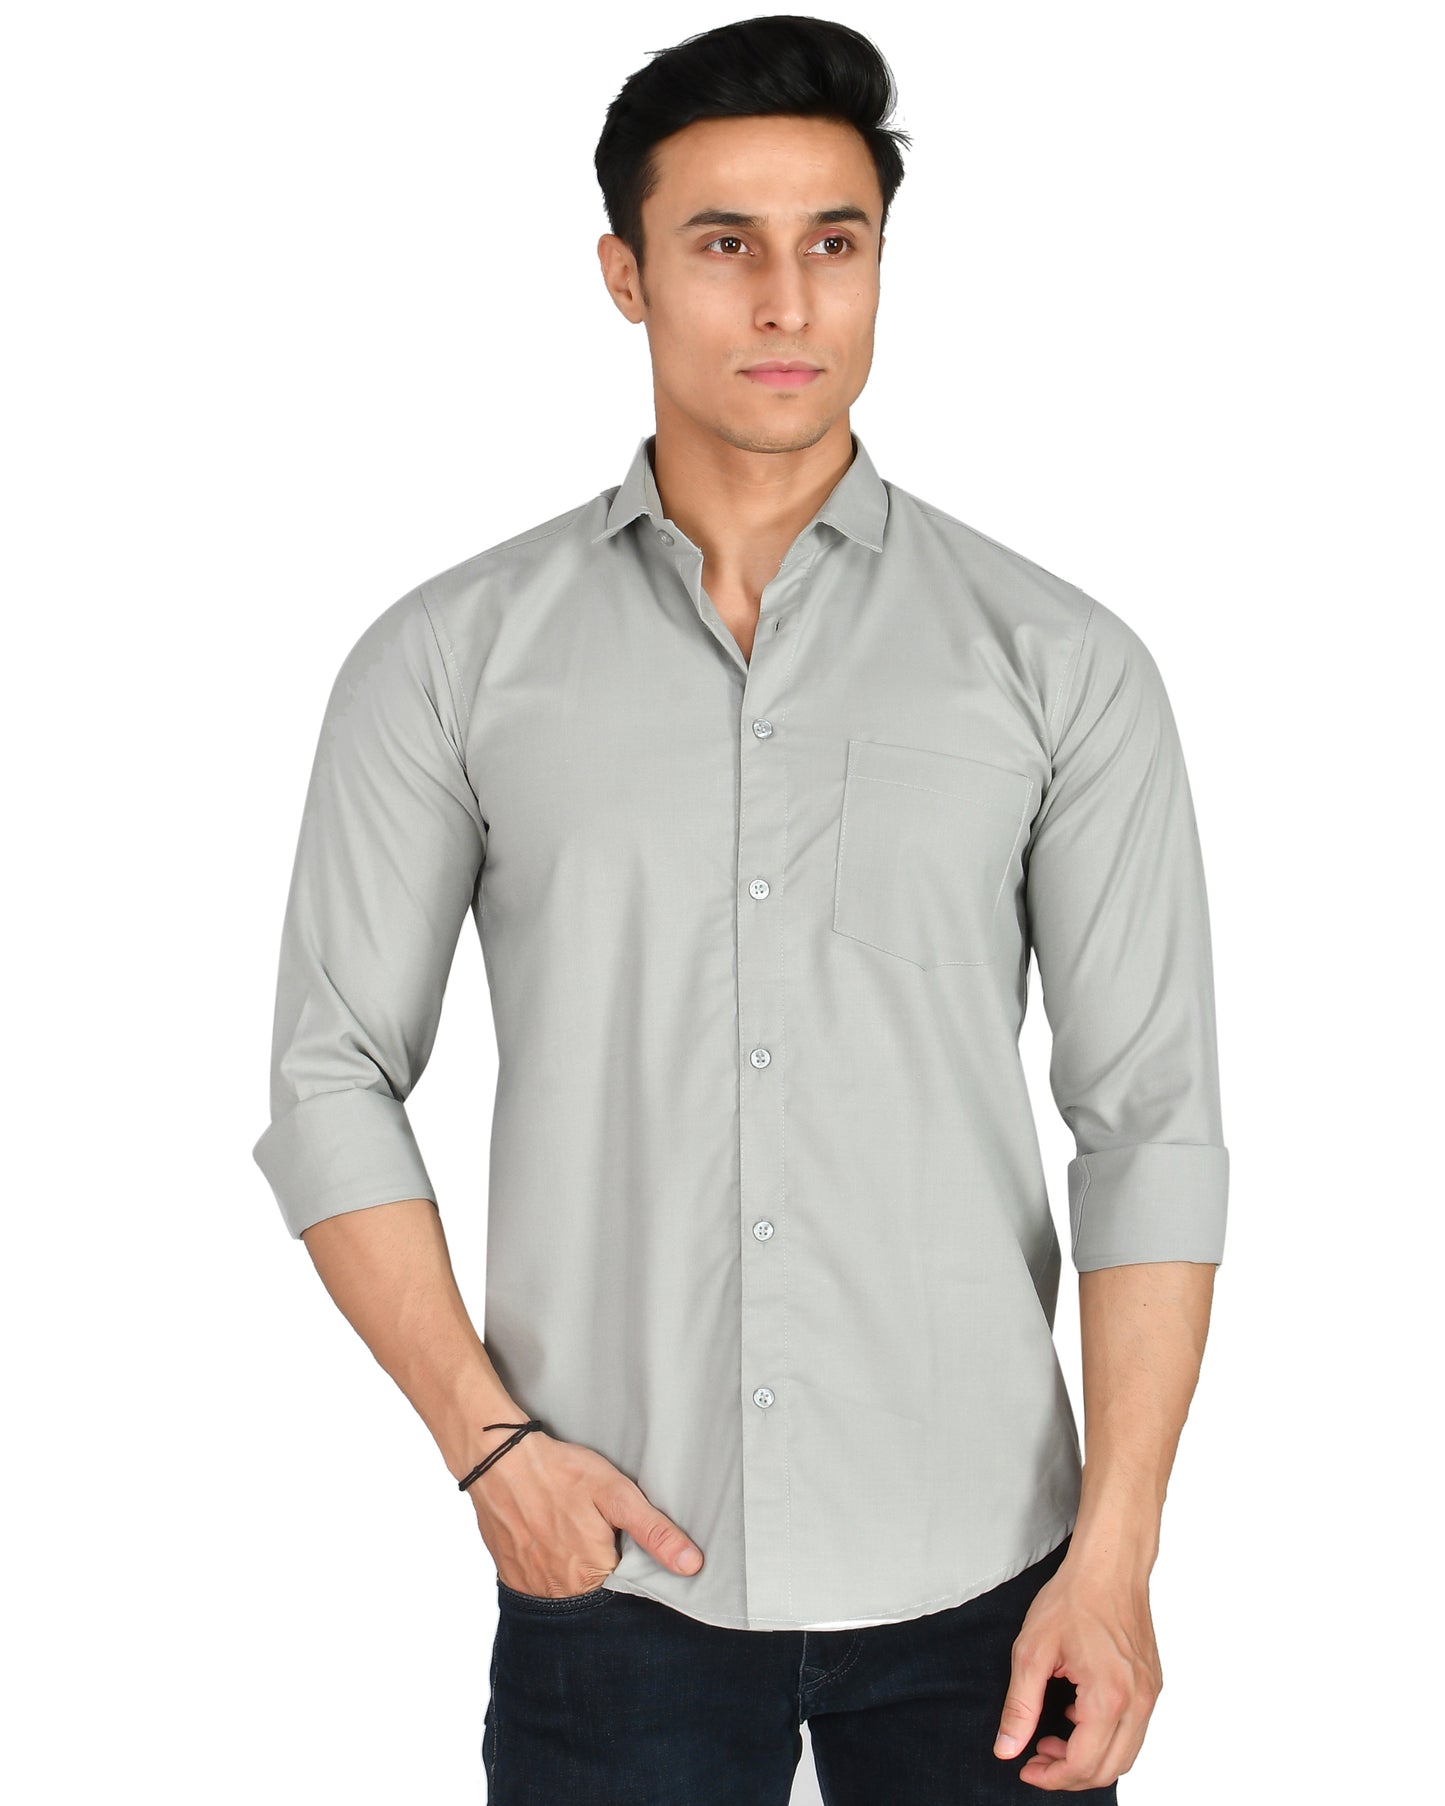 Grey Formal Cotton Shirt